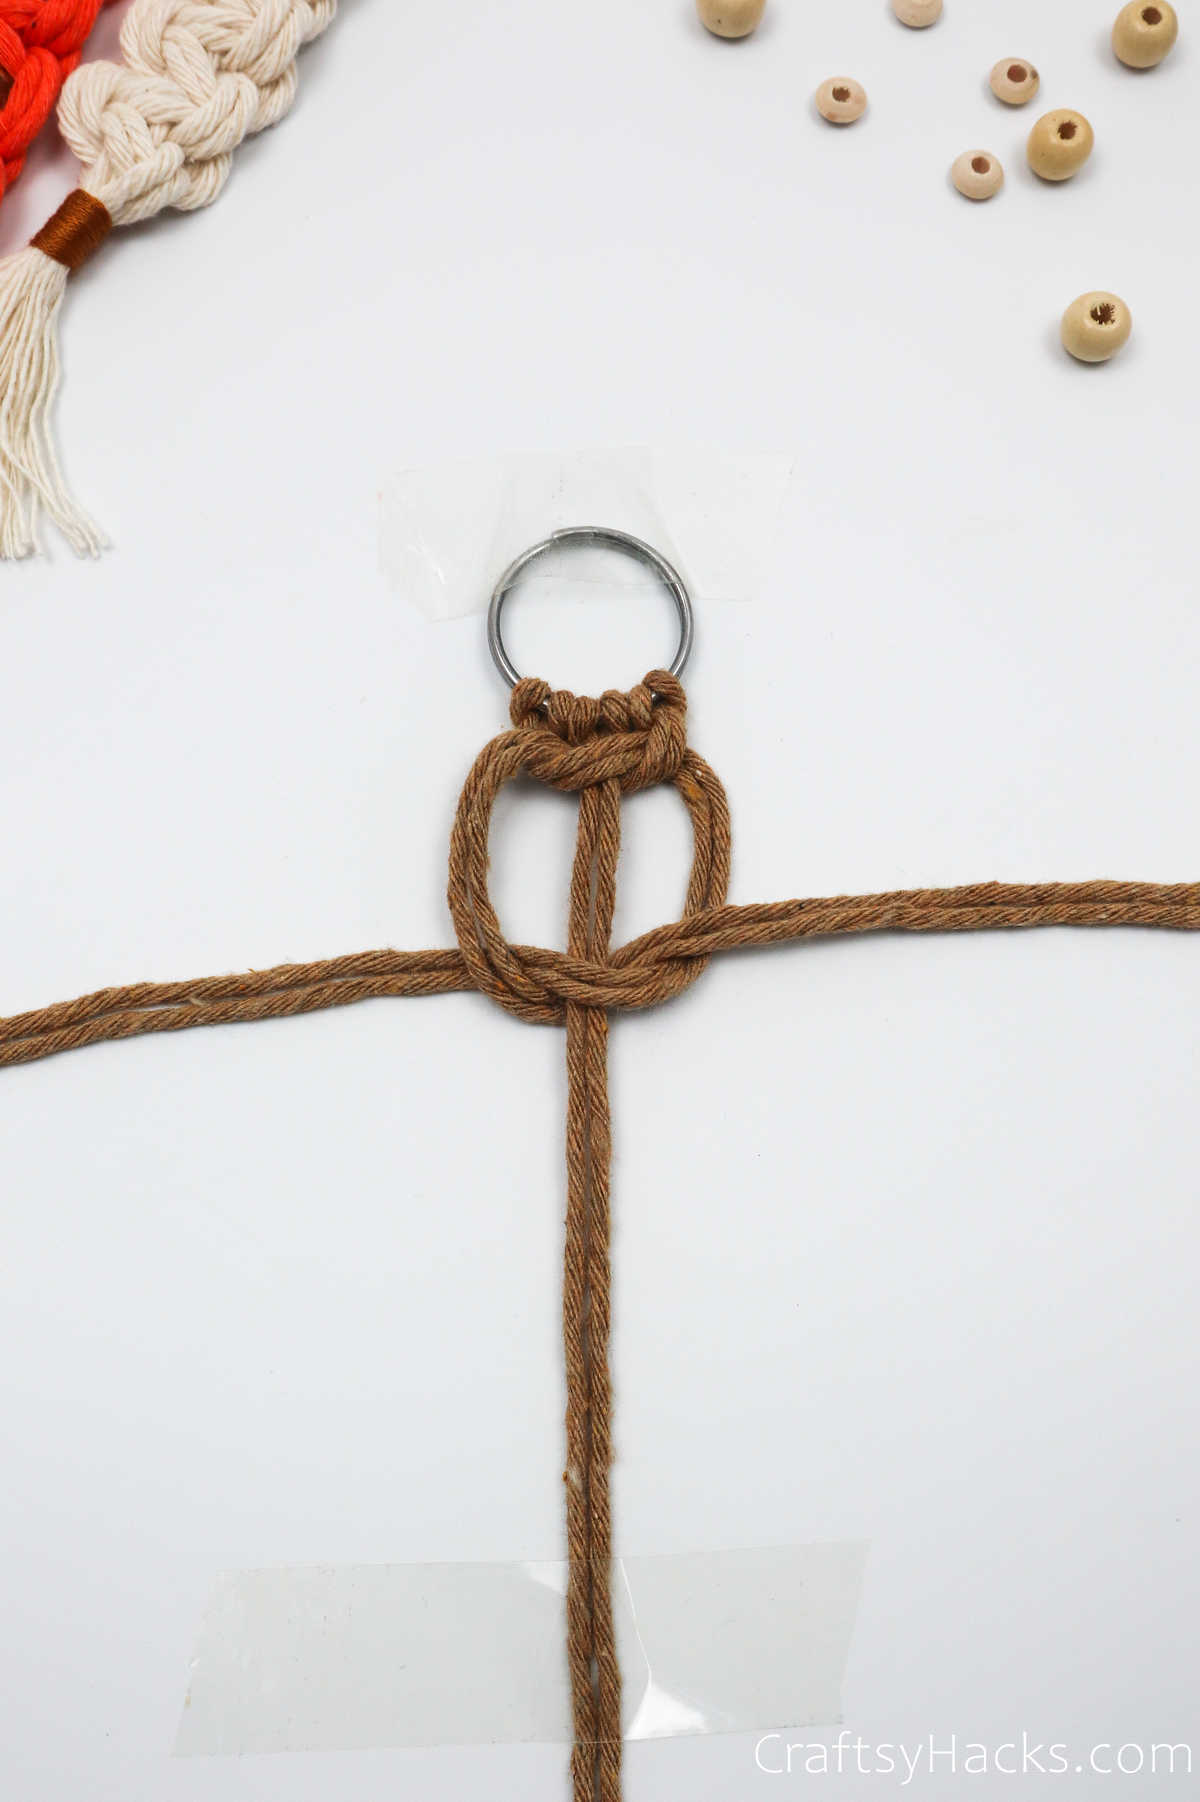 tying string knot